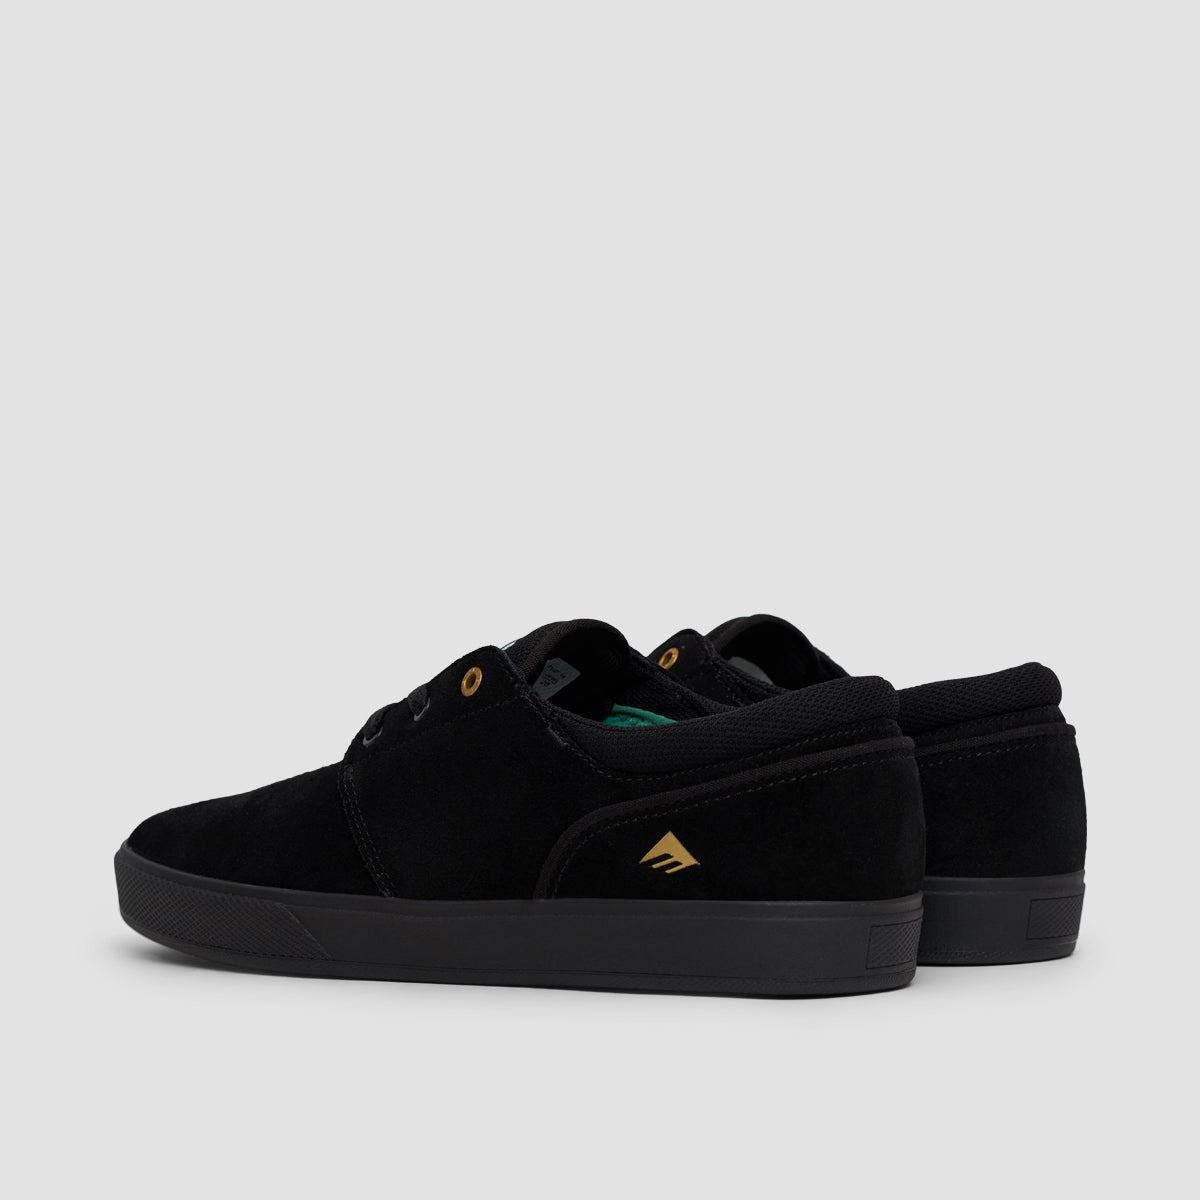 Emerica Figgy G6 Shoes - Black/Black